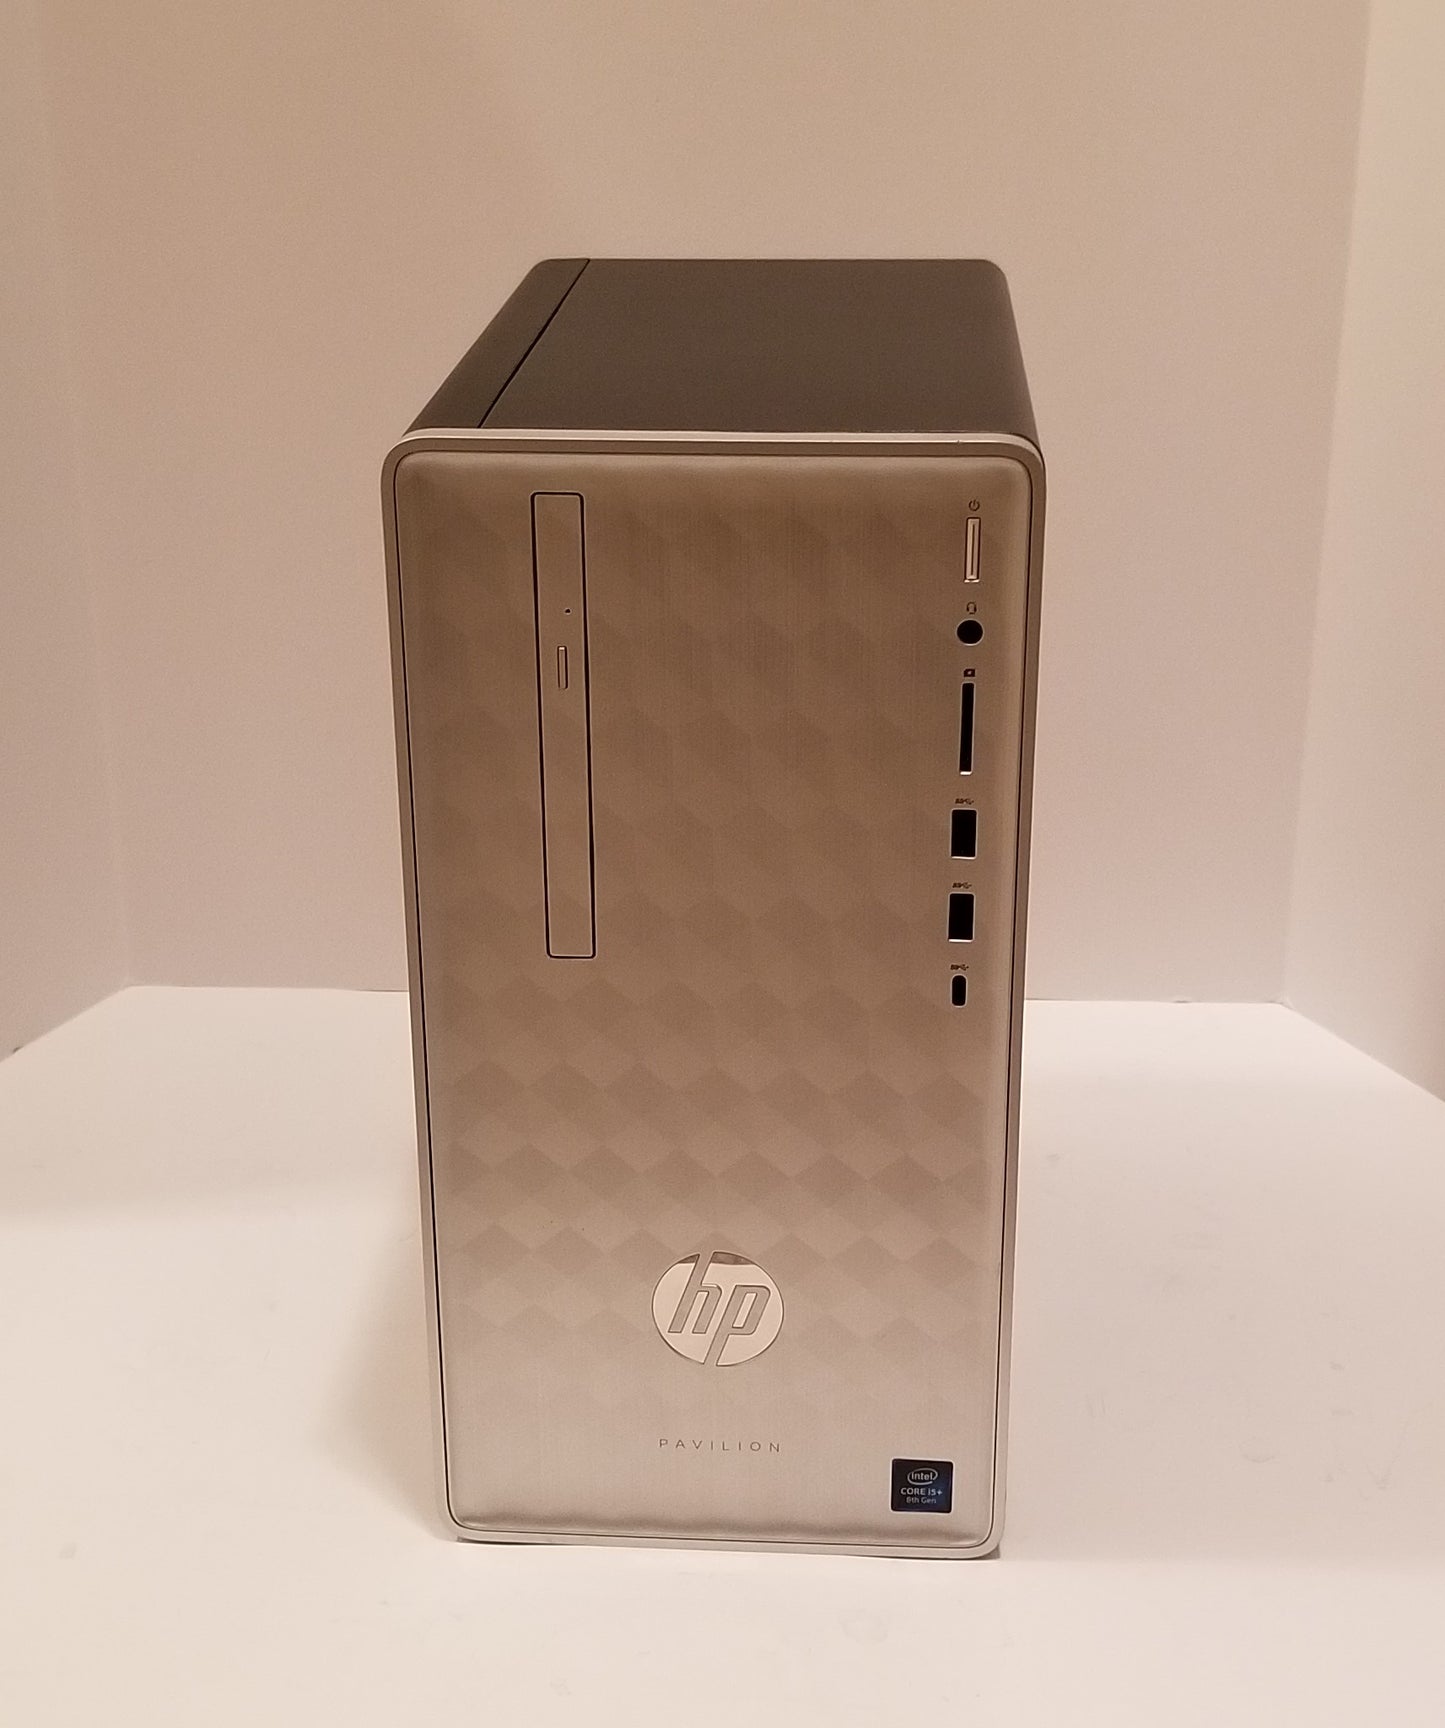 HP Pavilion 590-p0053w Intel i3 - Rekes Sales